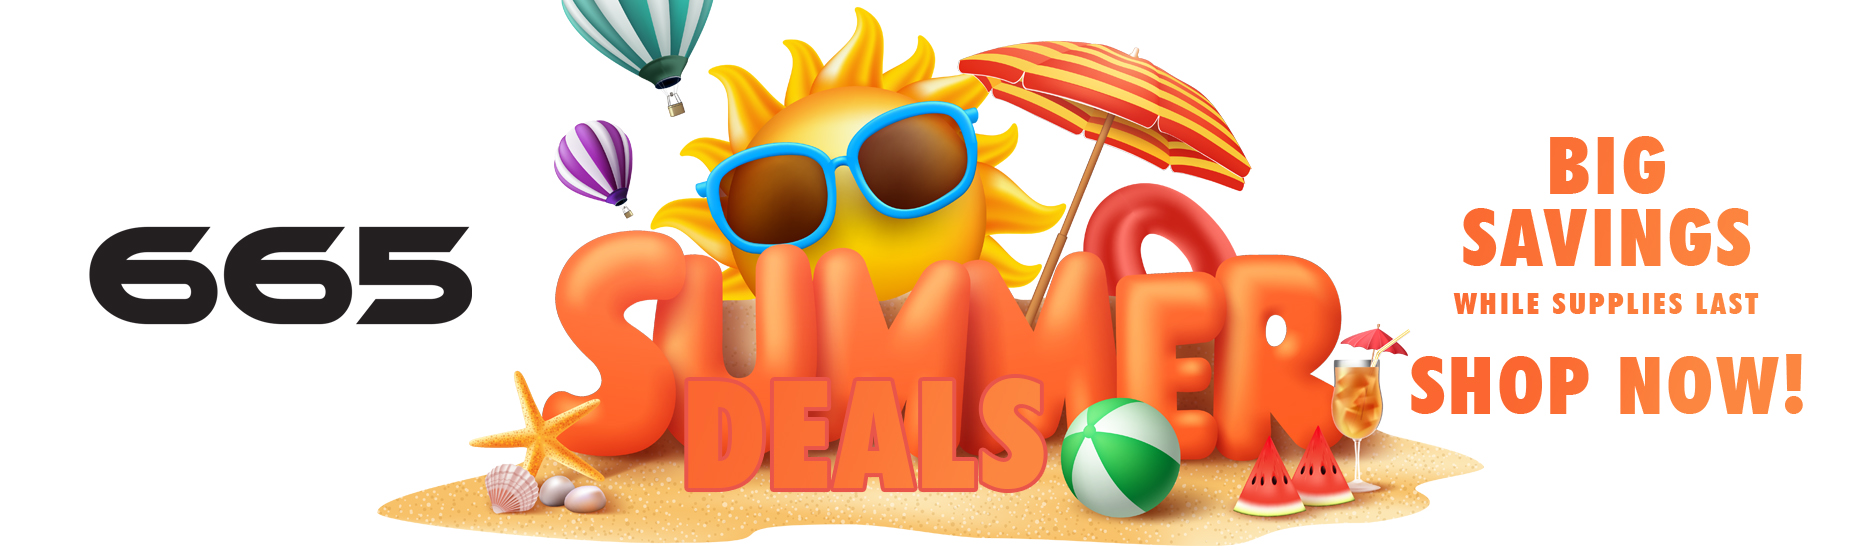 Summer Deals - Big Savings While Supplies Last - Shop Now!